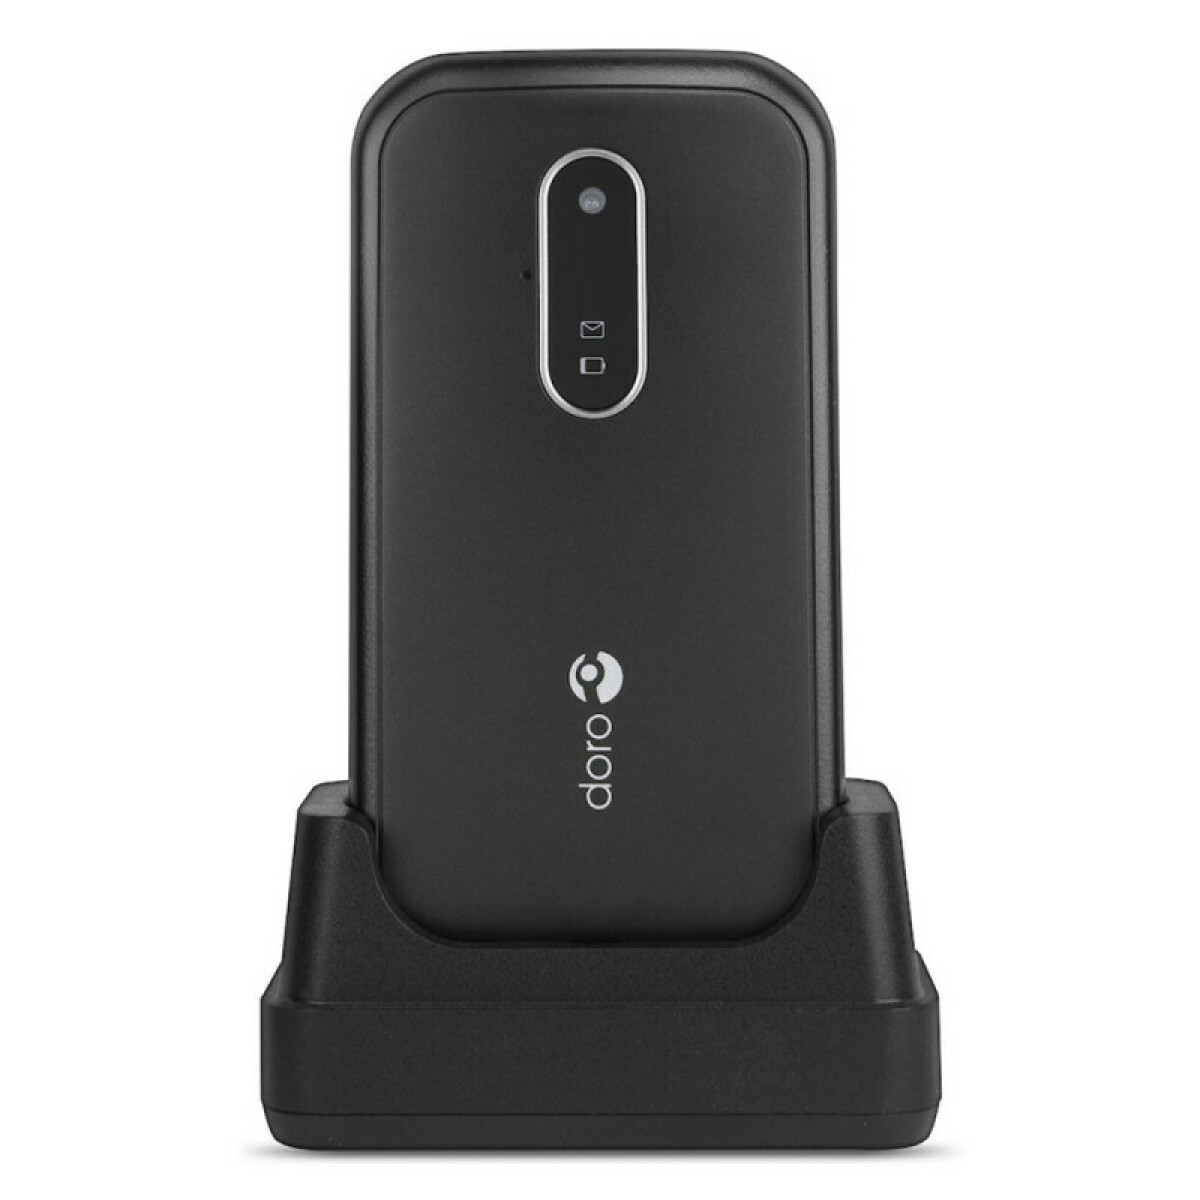 Smartphone Android Doro Doro 6620 Clapet - Noir / Blanc